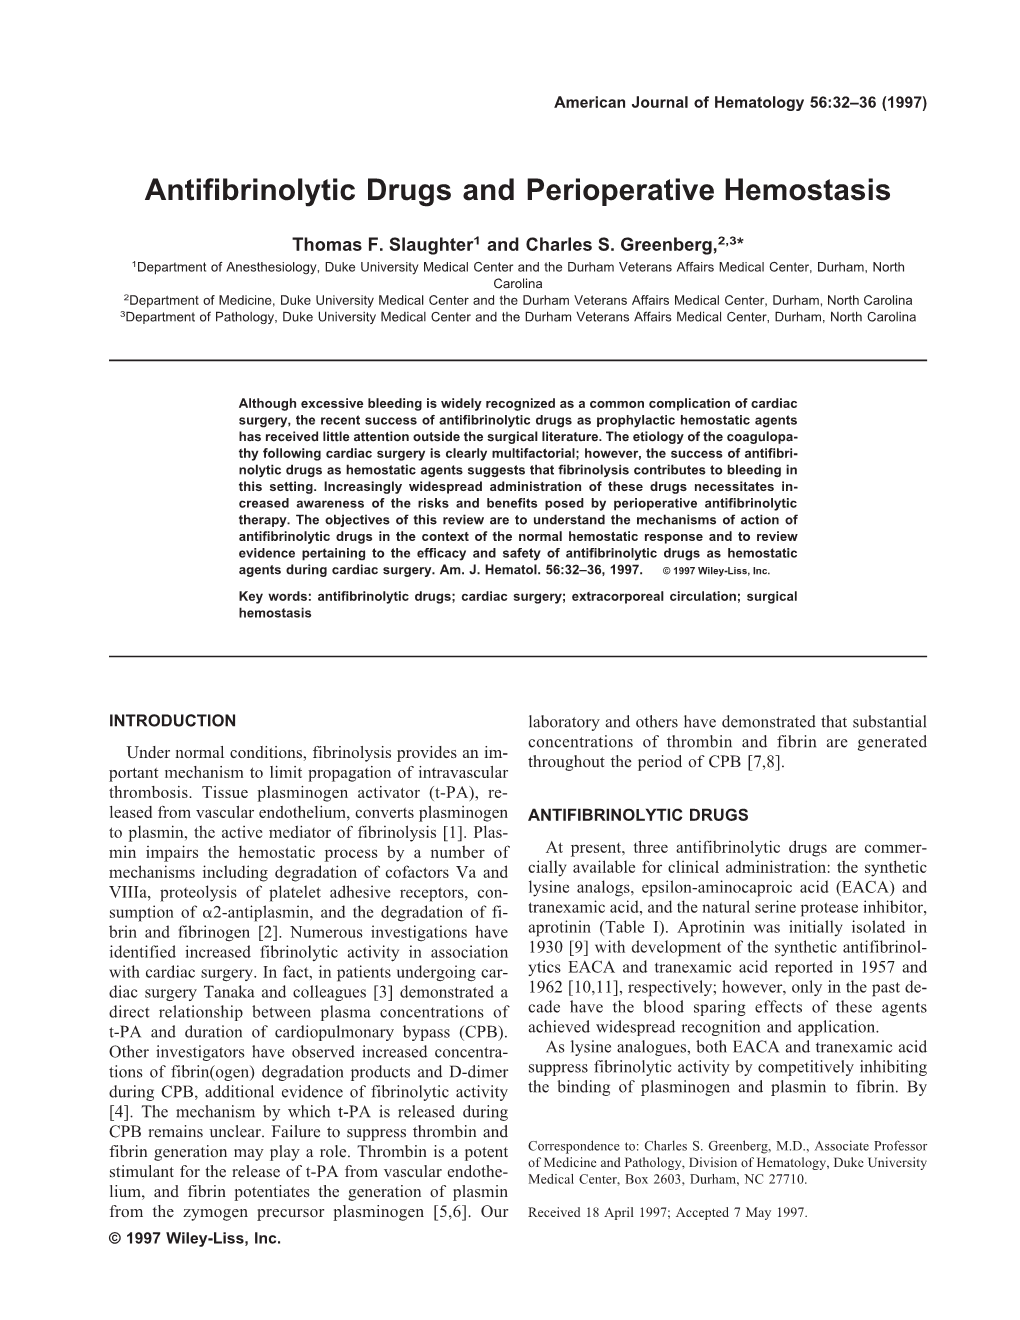 Antifibrinolytic Drugs and Perioperative Hemostasis